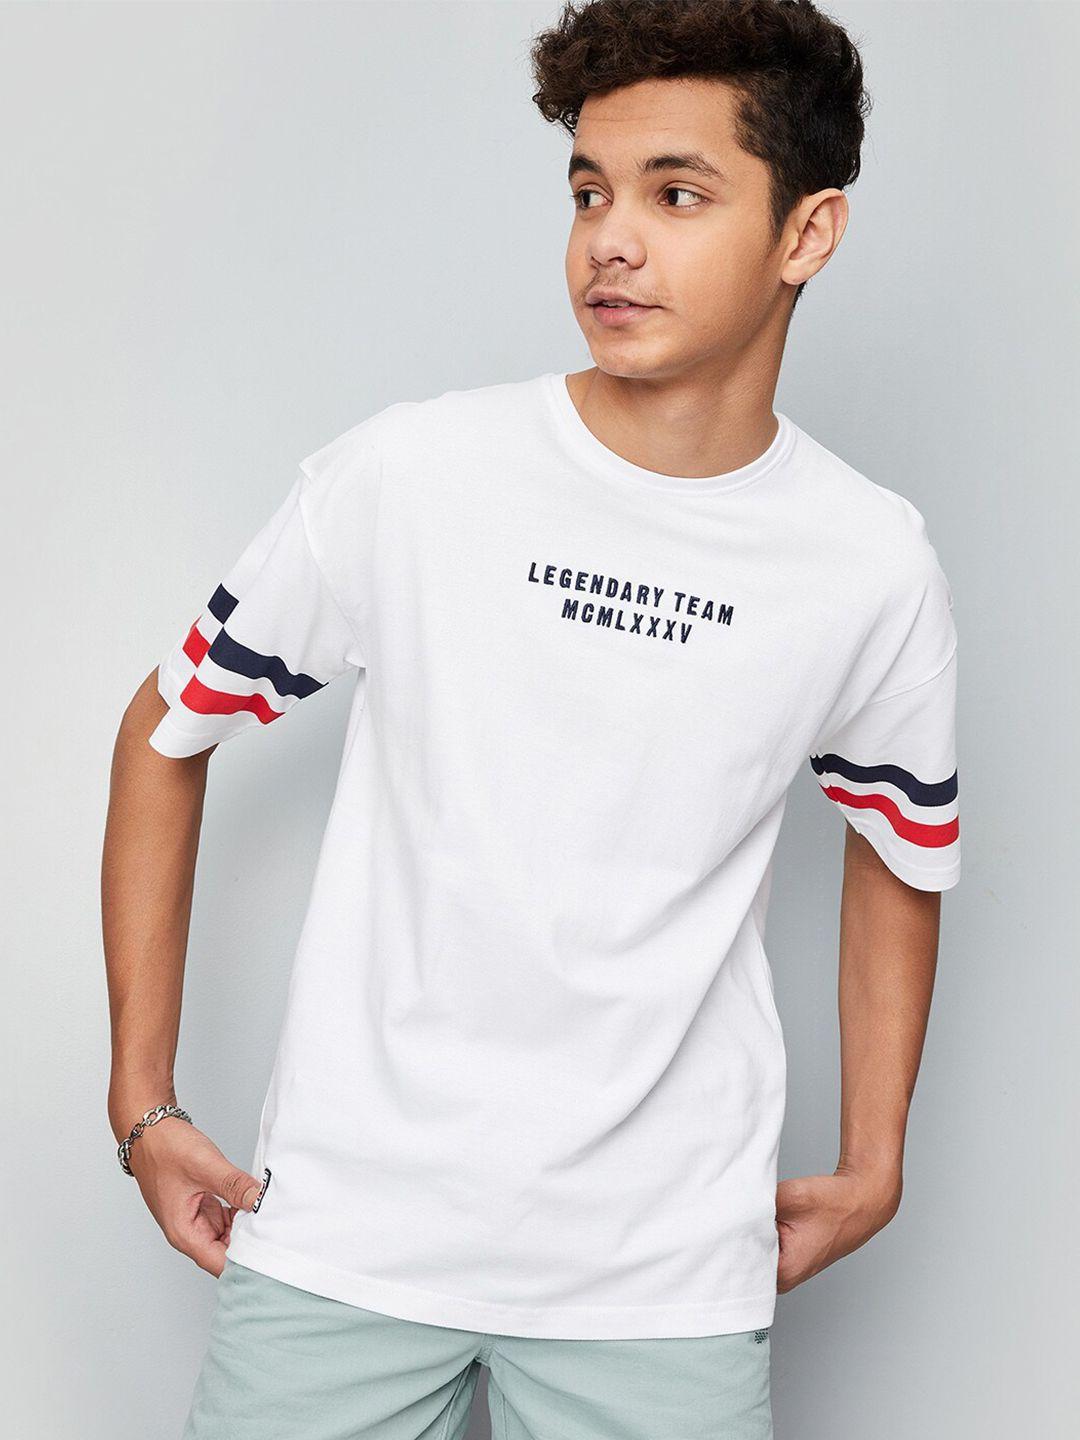 max-boys-typography-printed-cotton-t-shirt